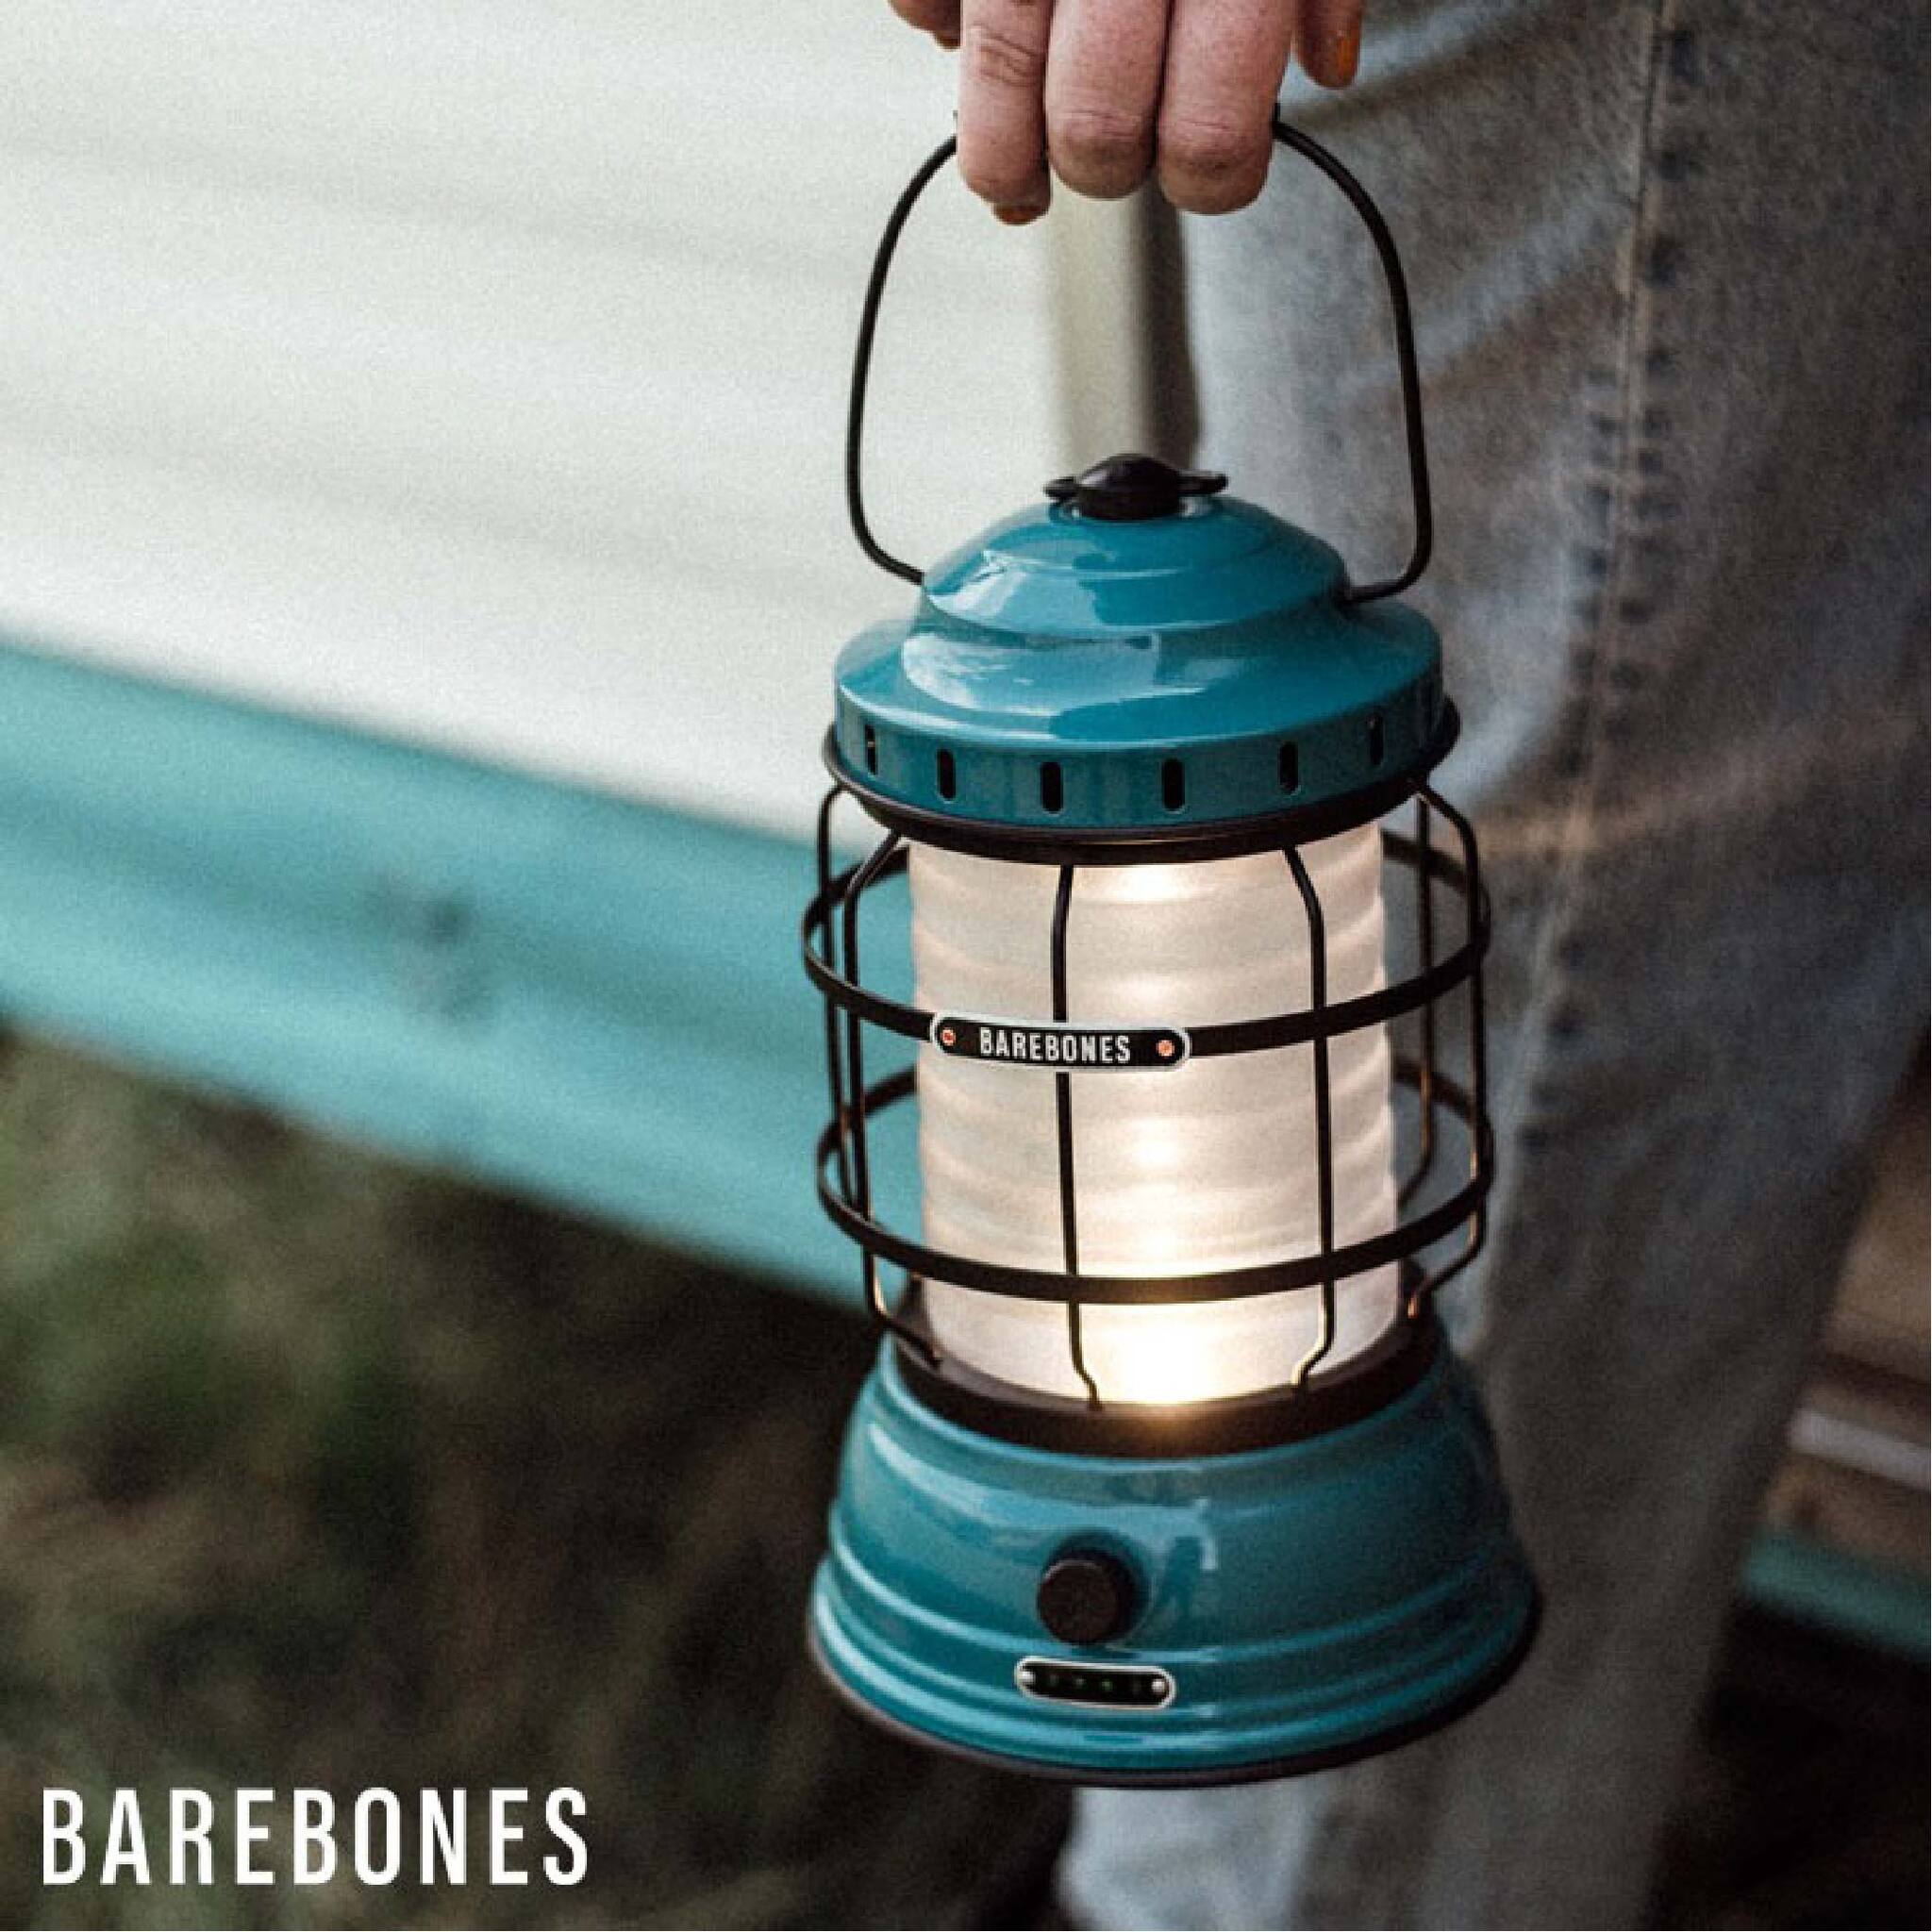 【Barebones】手提營燈 藍綠色 Forest LIV-161